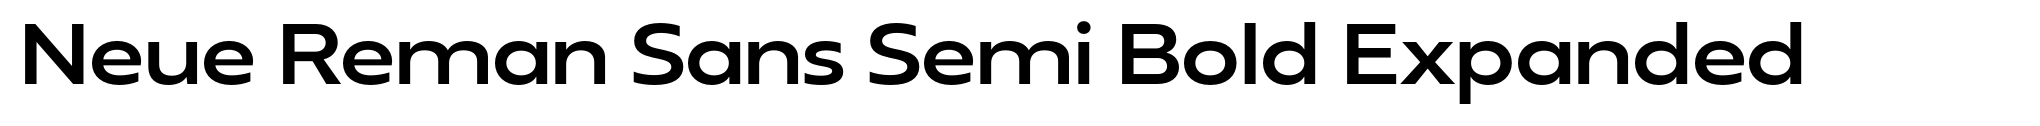 Neue Reman Sans Semi Bold Expanded image